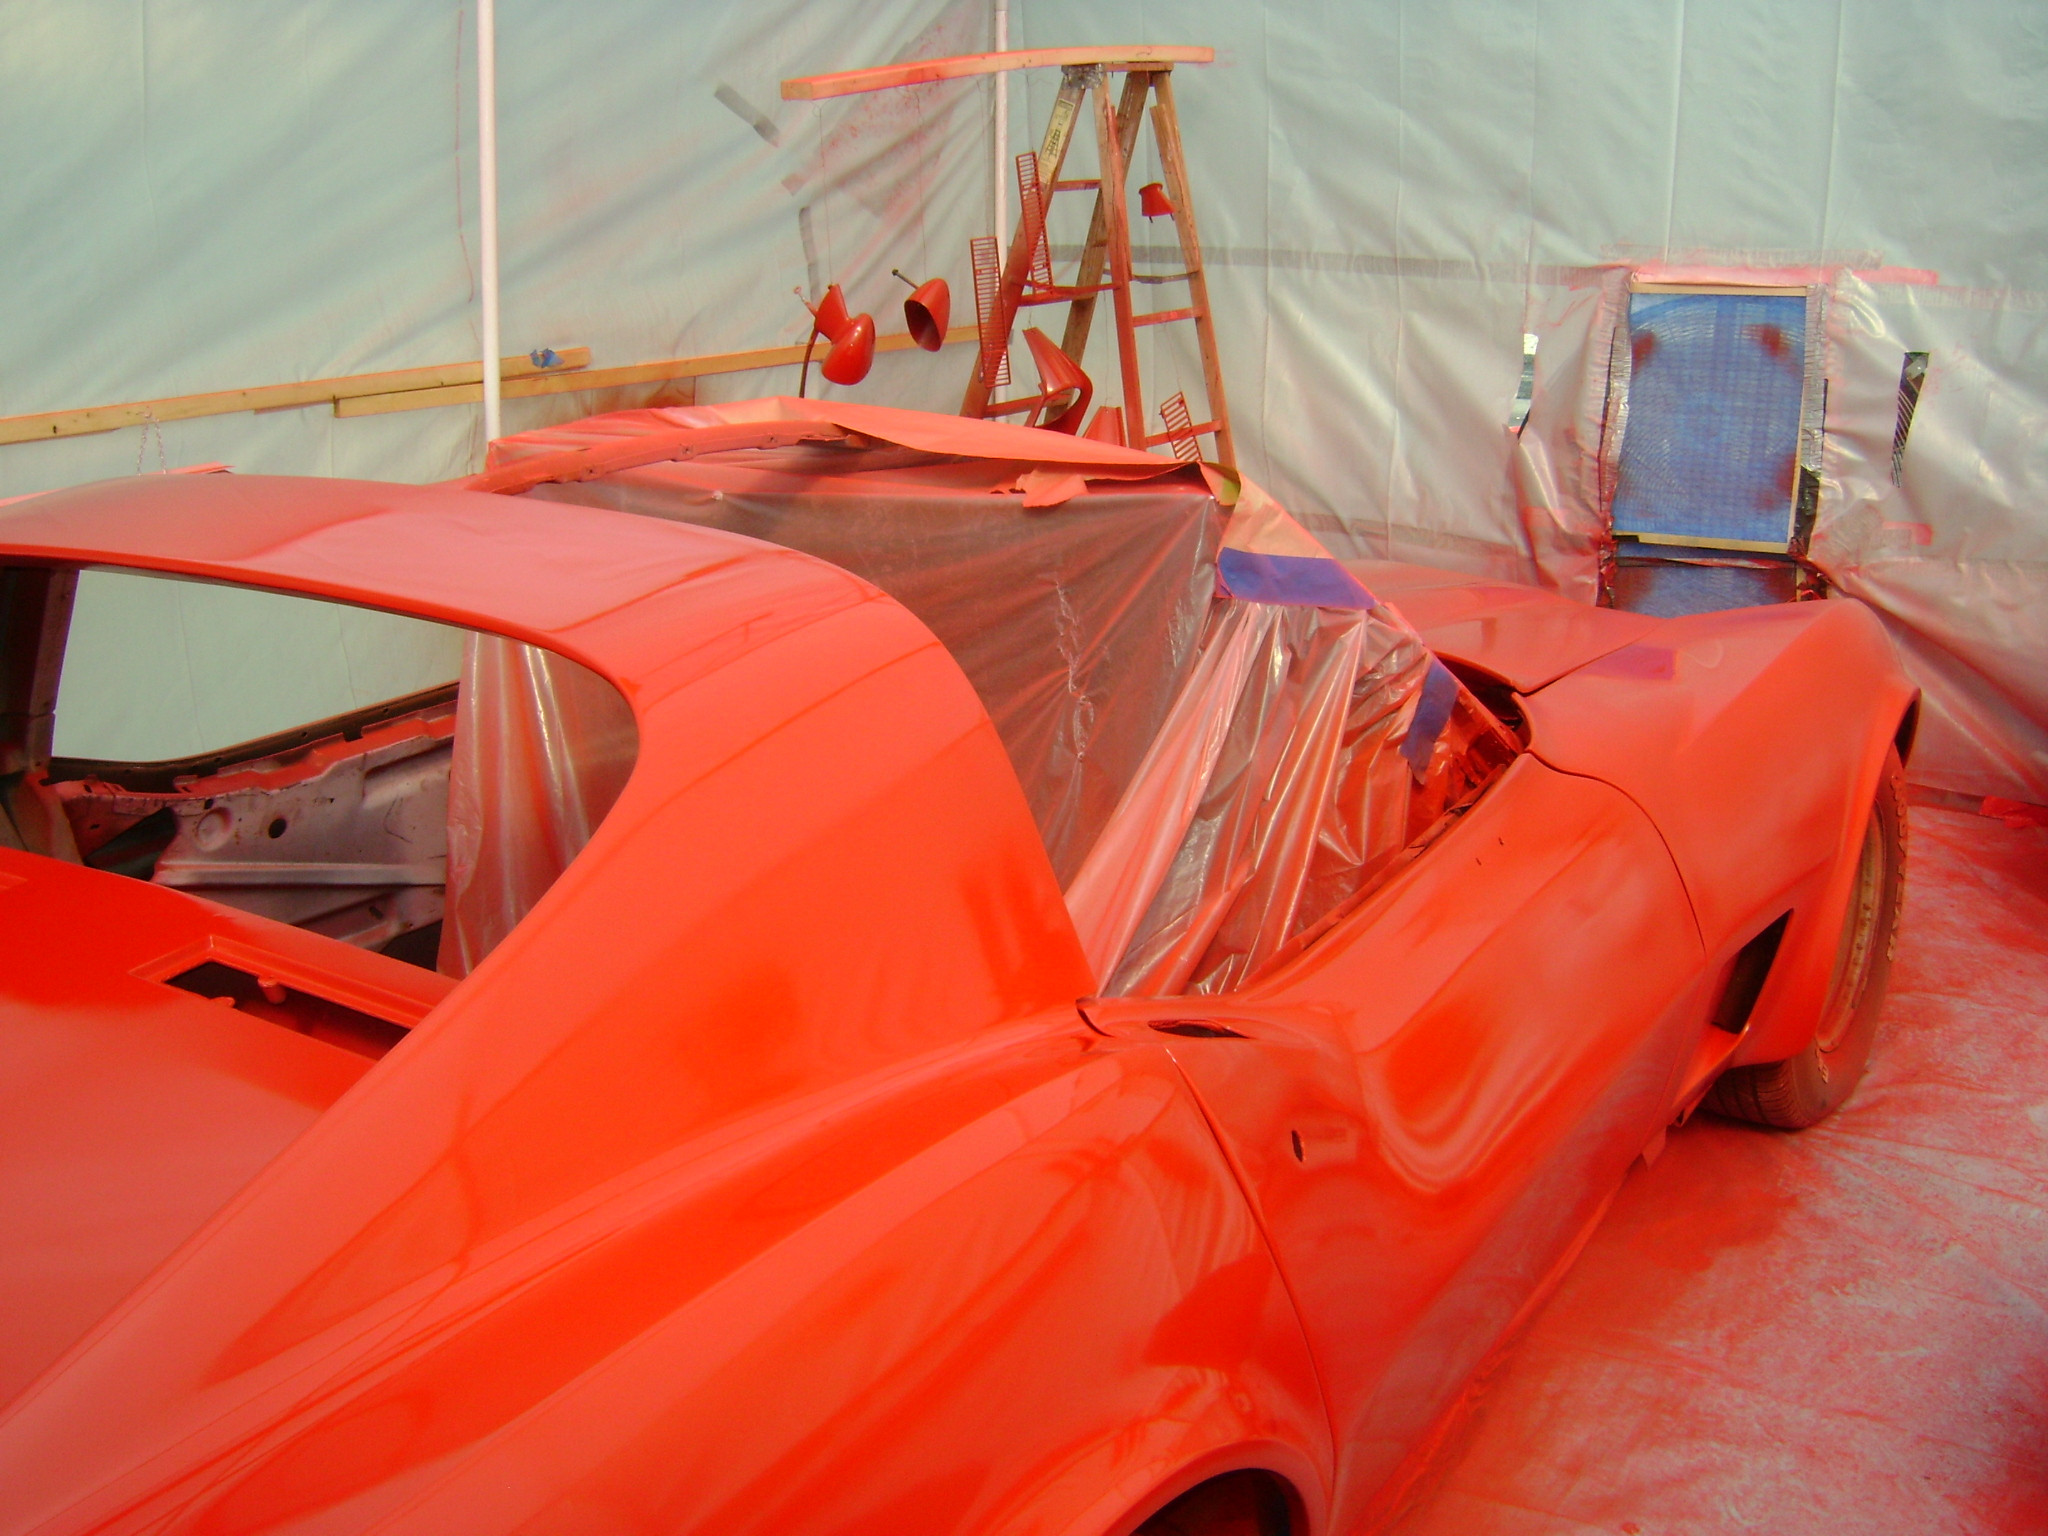 Best ideas about DIY Auto Paint Booth
. Save or Pin My DIY paint booth CorvetteForum Chevrolet Corvette Now.